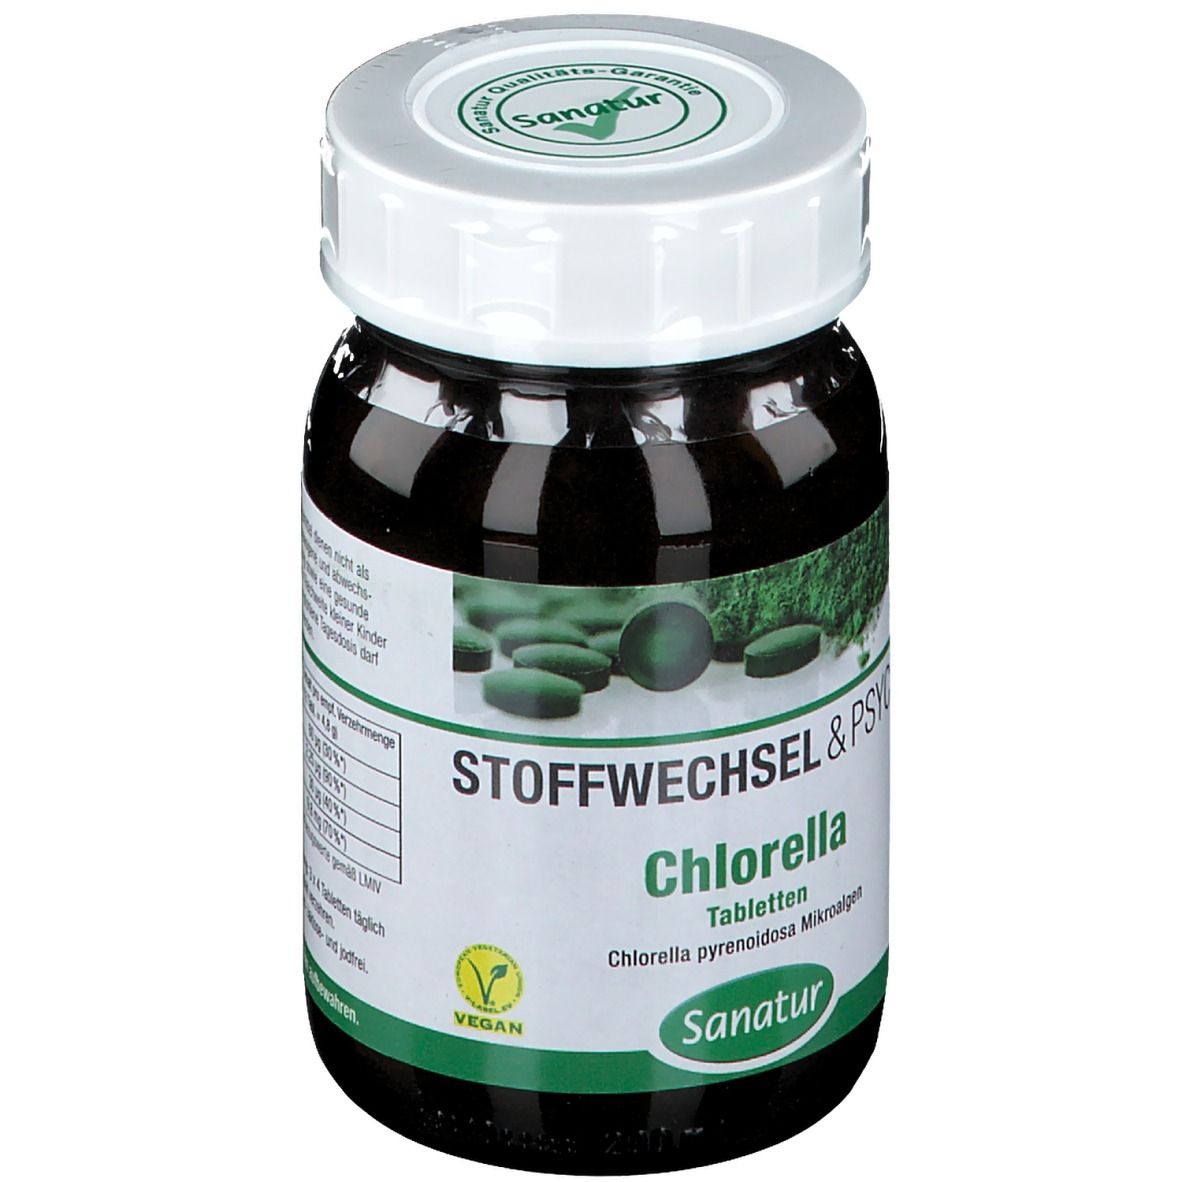 Sanatur Chlorella Tabletten